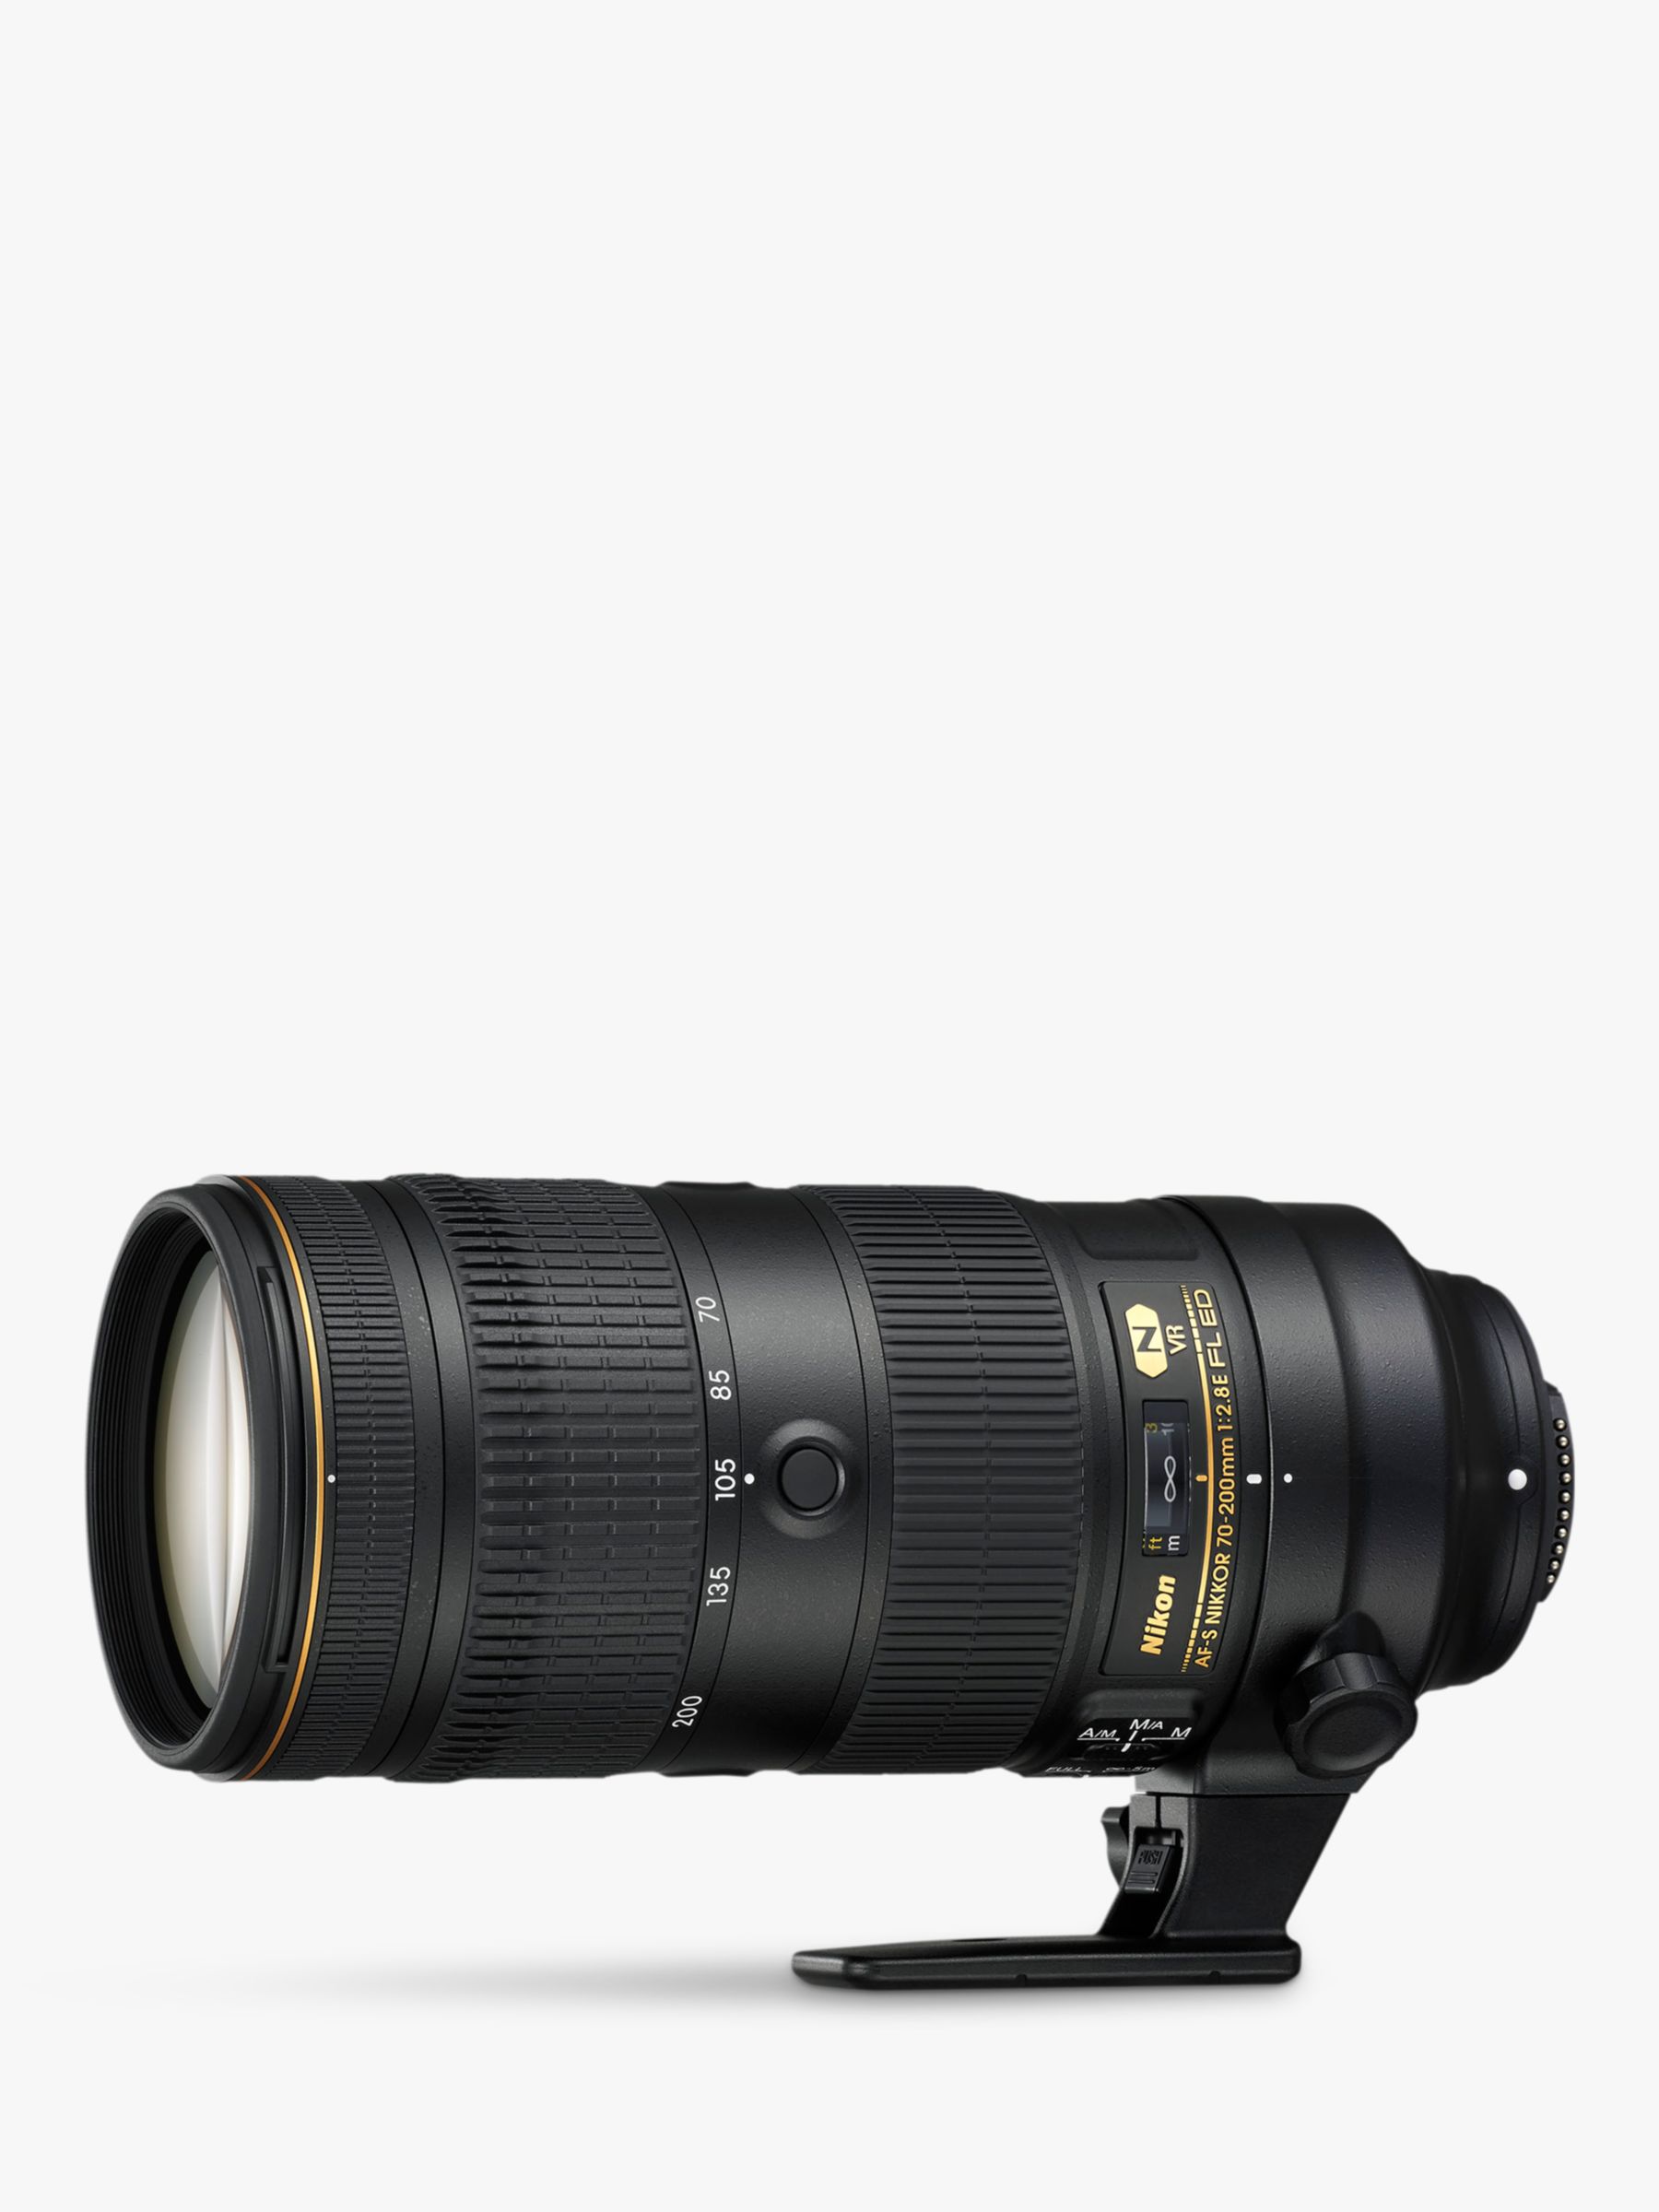 Nikon FX 70-200mm f/2.8E FL ED VR AF-S Telephoto Lens